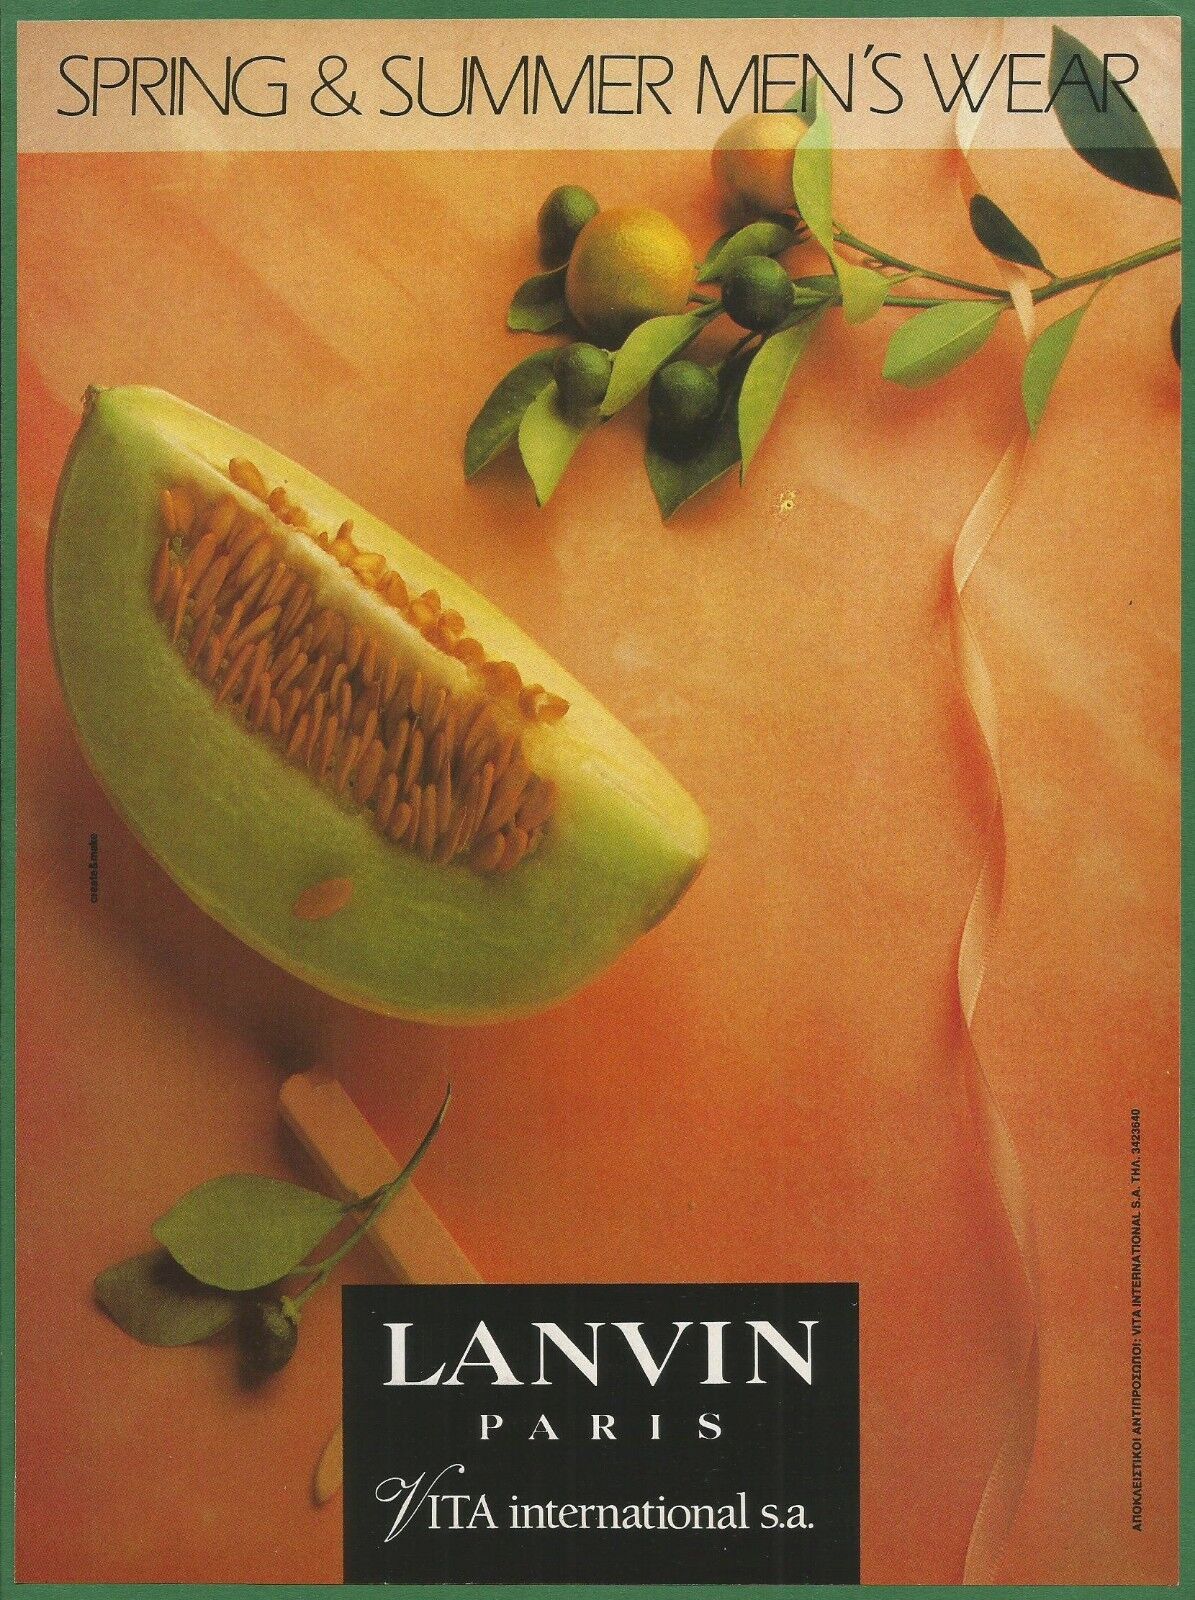 LANVIN Paris. Spring  & Summer Men's Wear - 1991 Print Ad